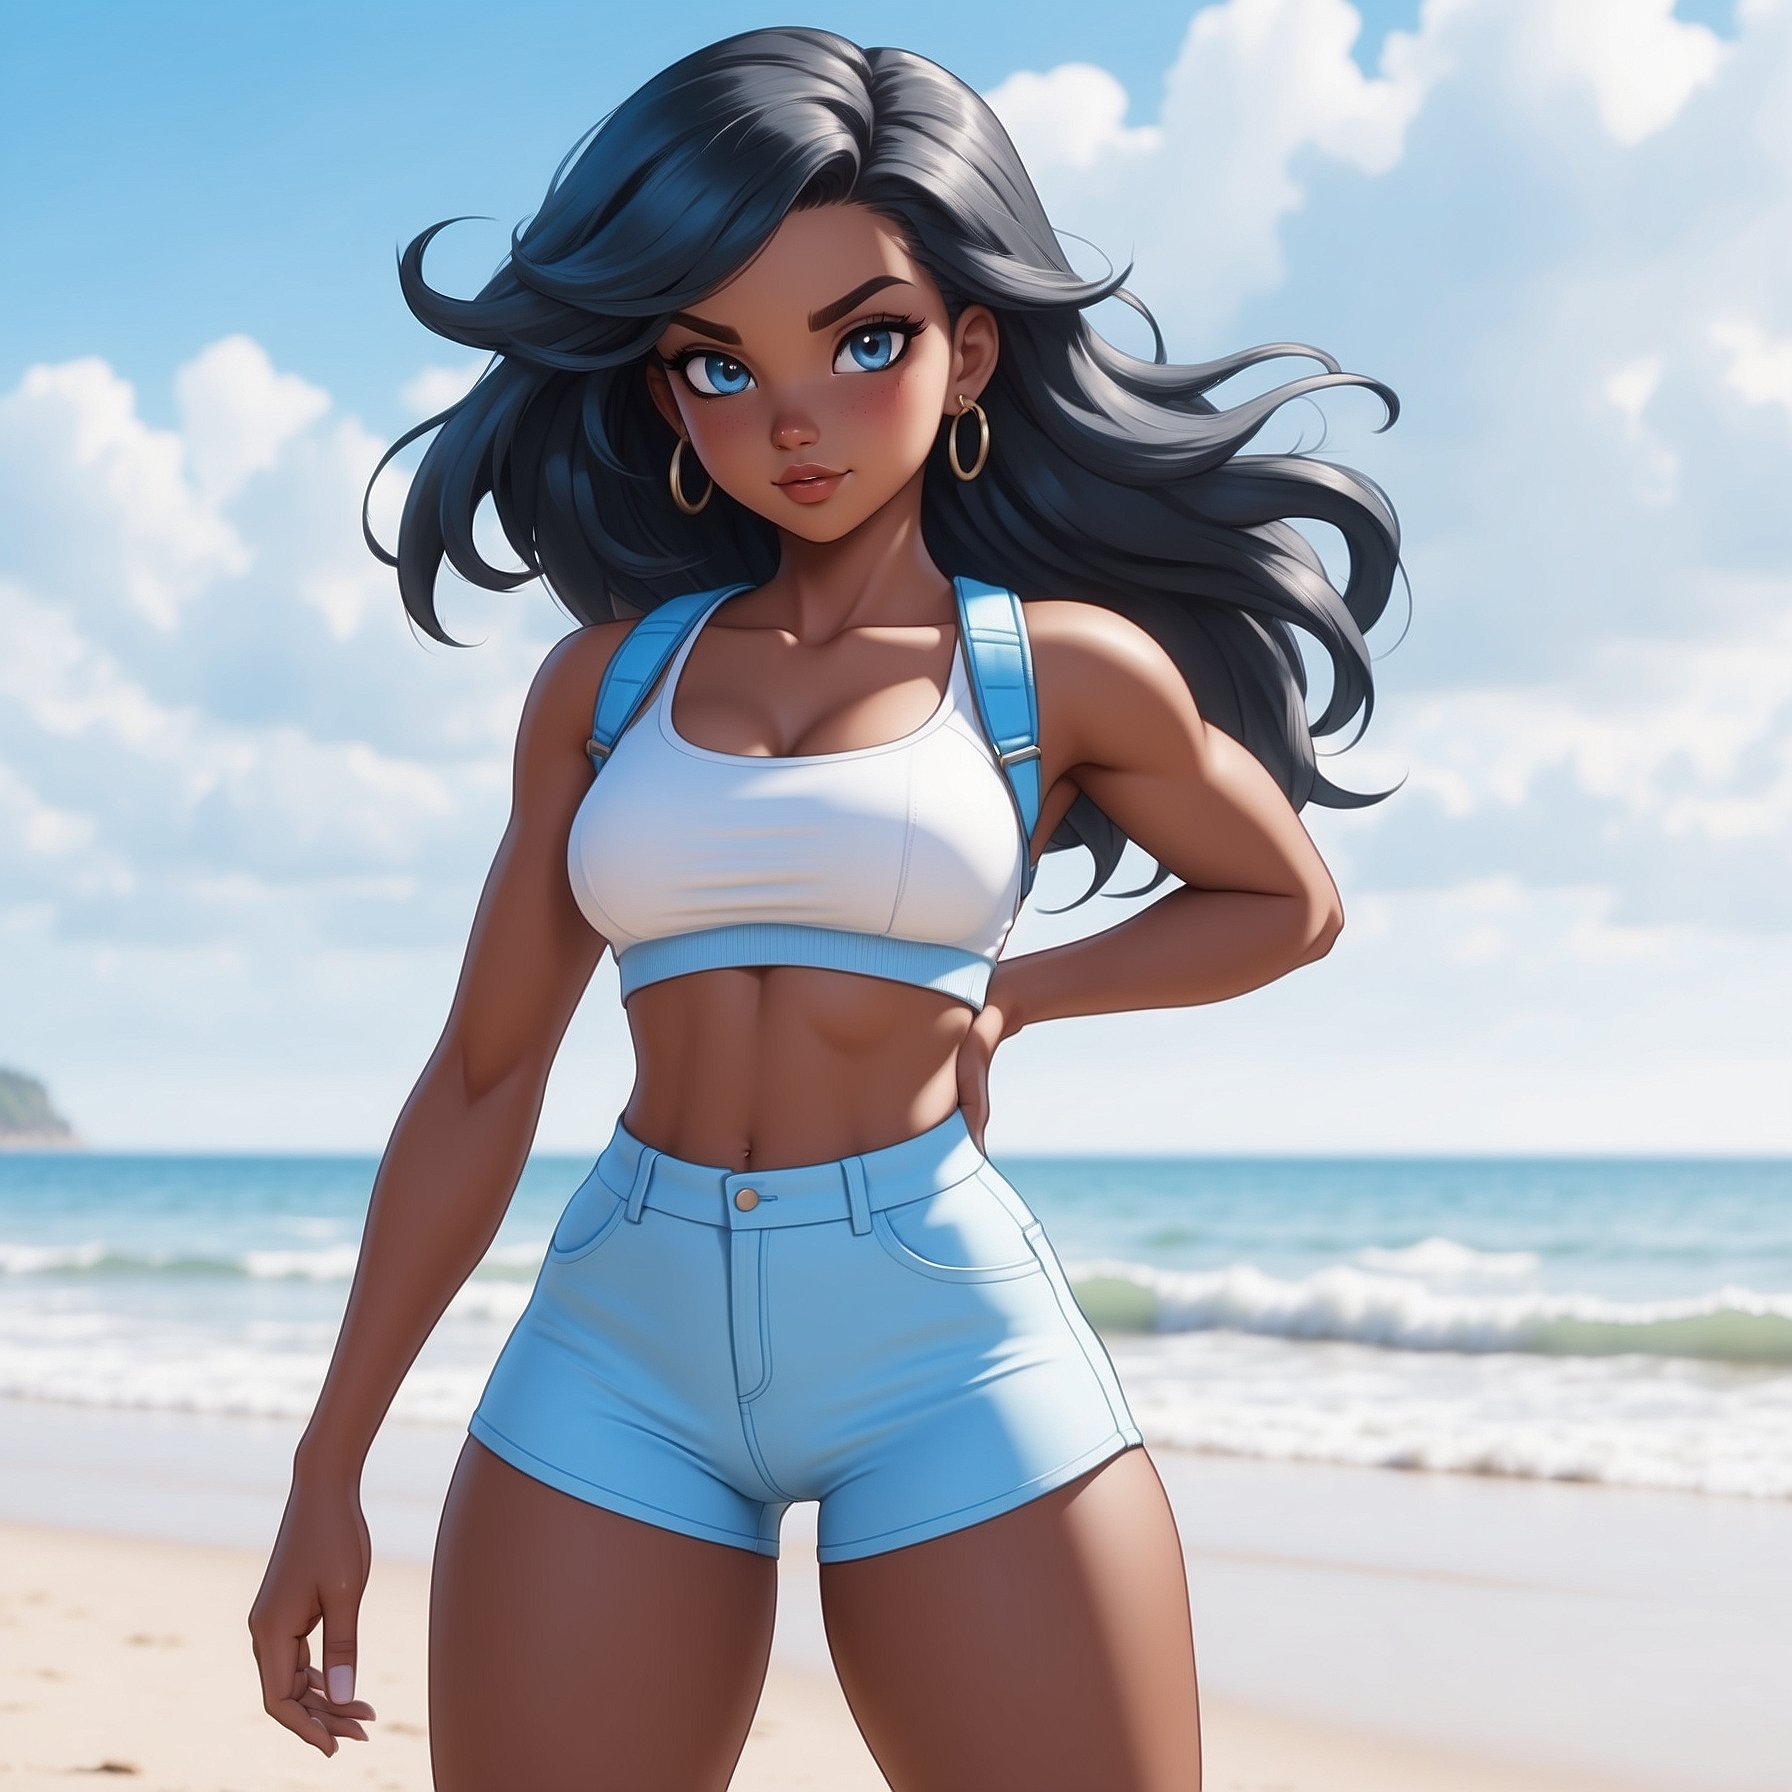 AI Artwork Generated by Leonardo AI - Cartoon Style Girl on the Beach